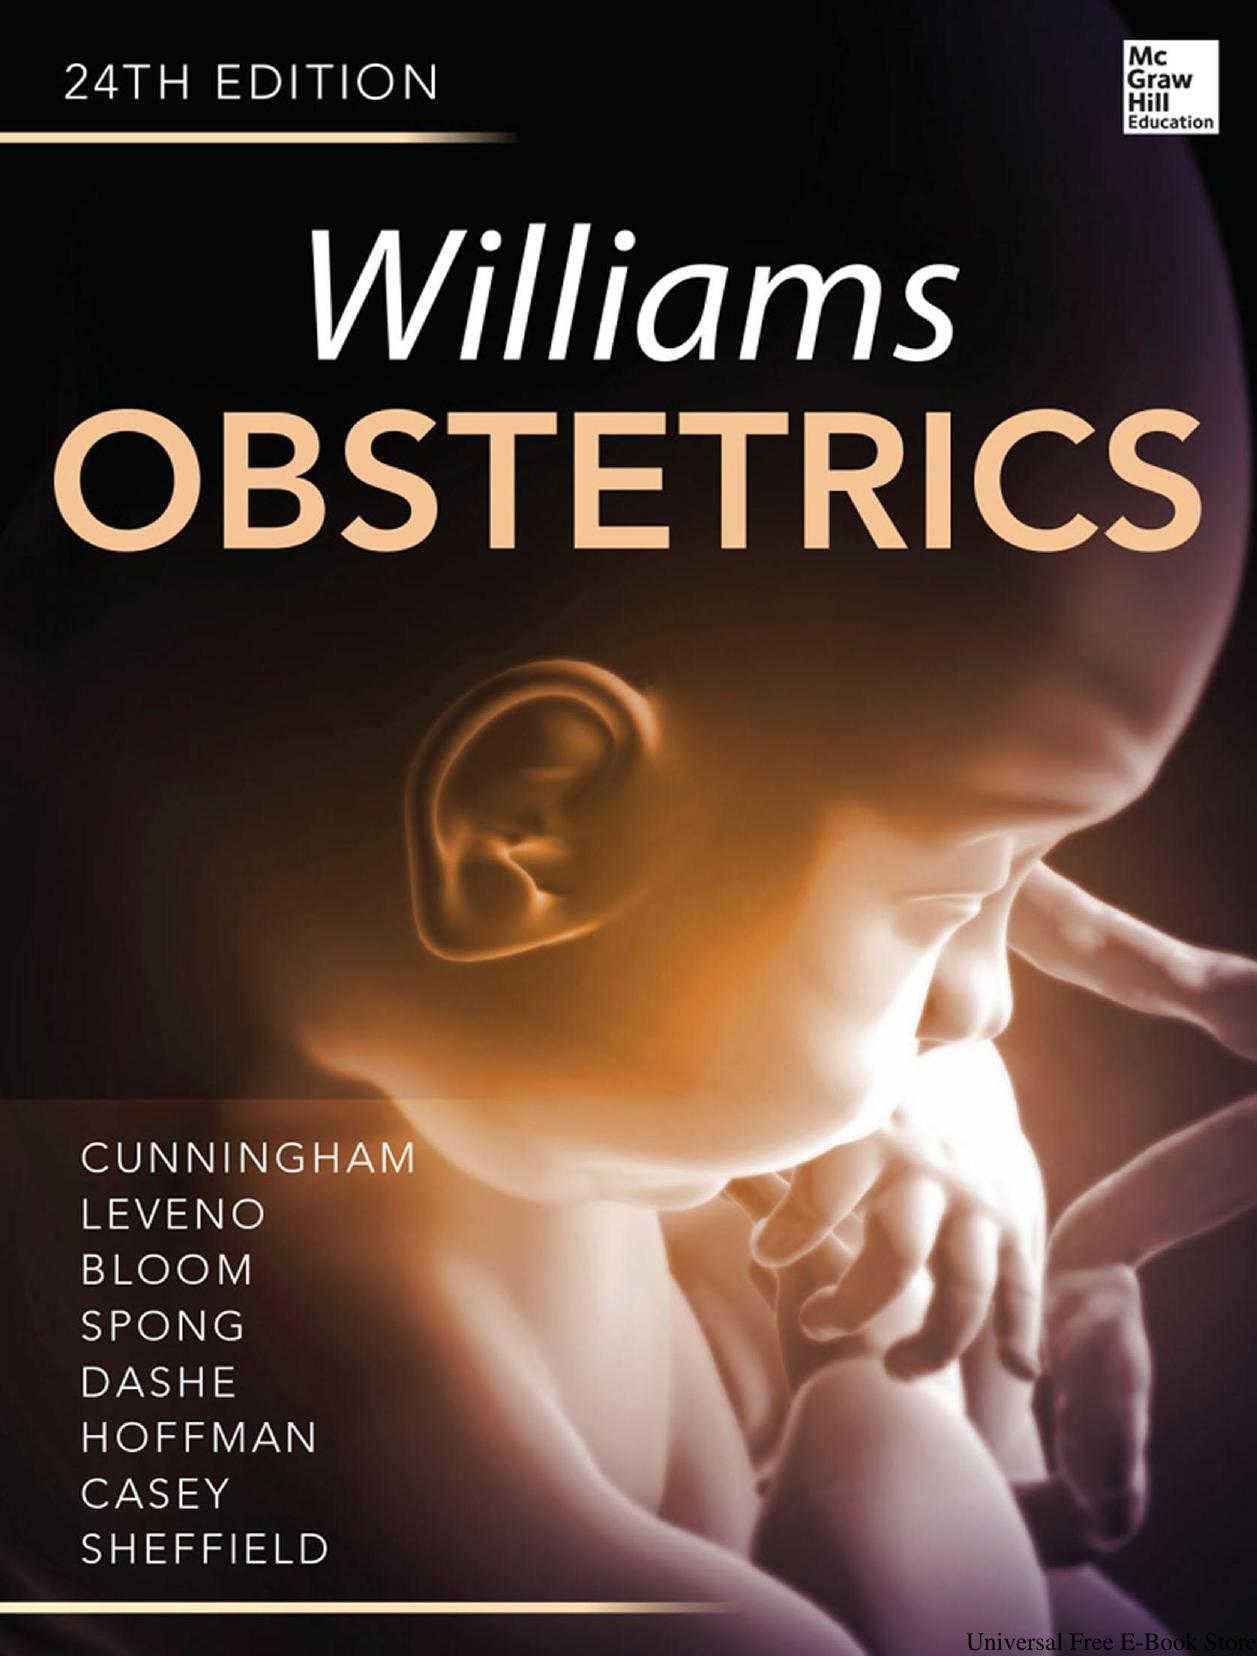 Williams Obstetrics, 24th Edition 2014